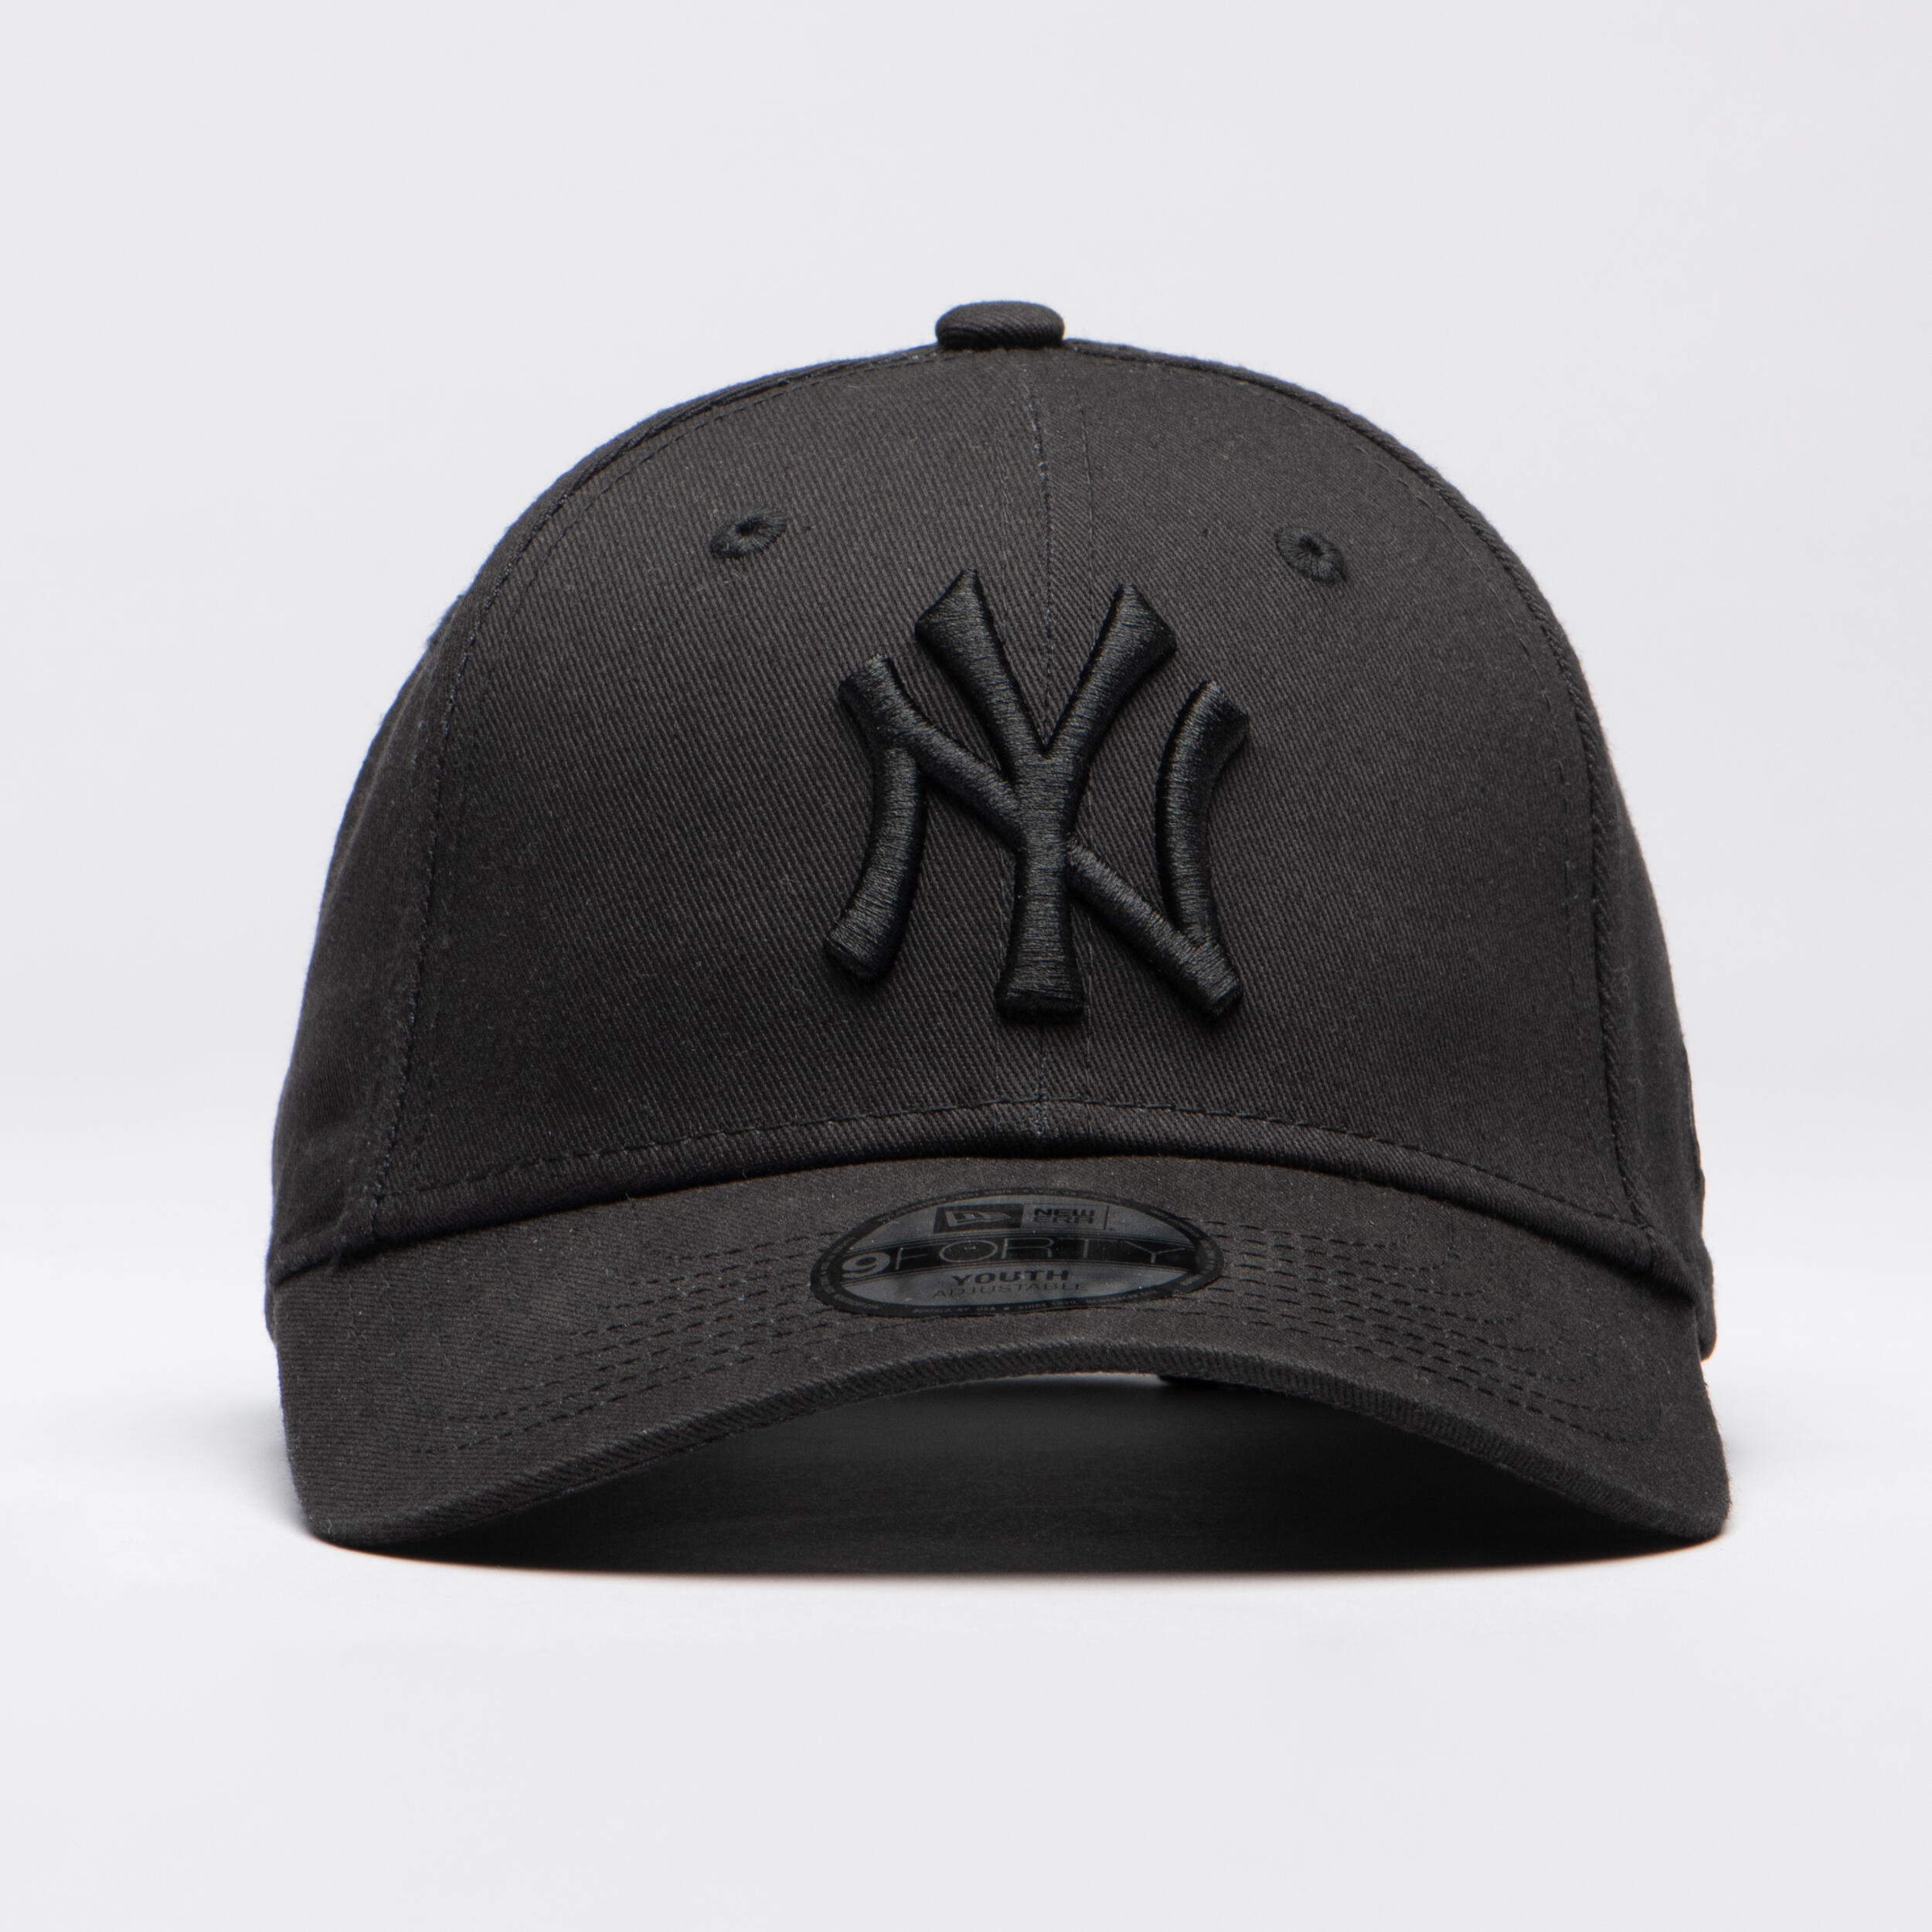 NEW ERA Men's / Women's MLB Baseball Cap New York Yankees - Black